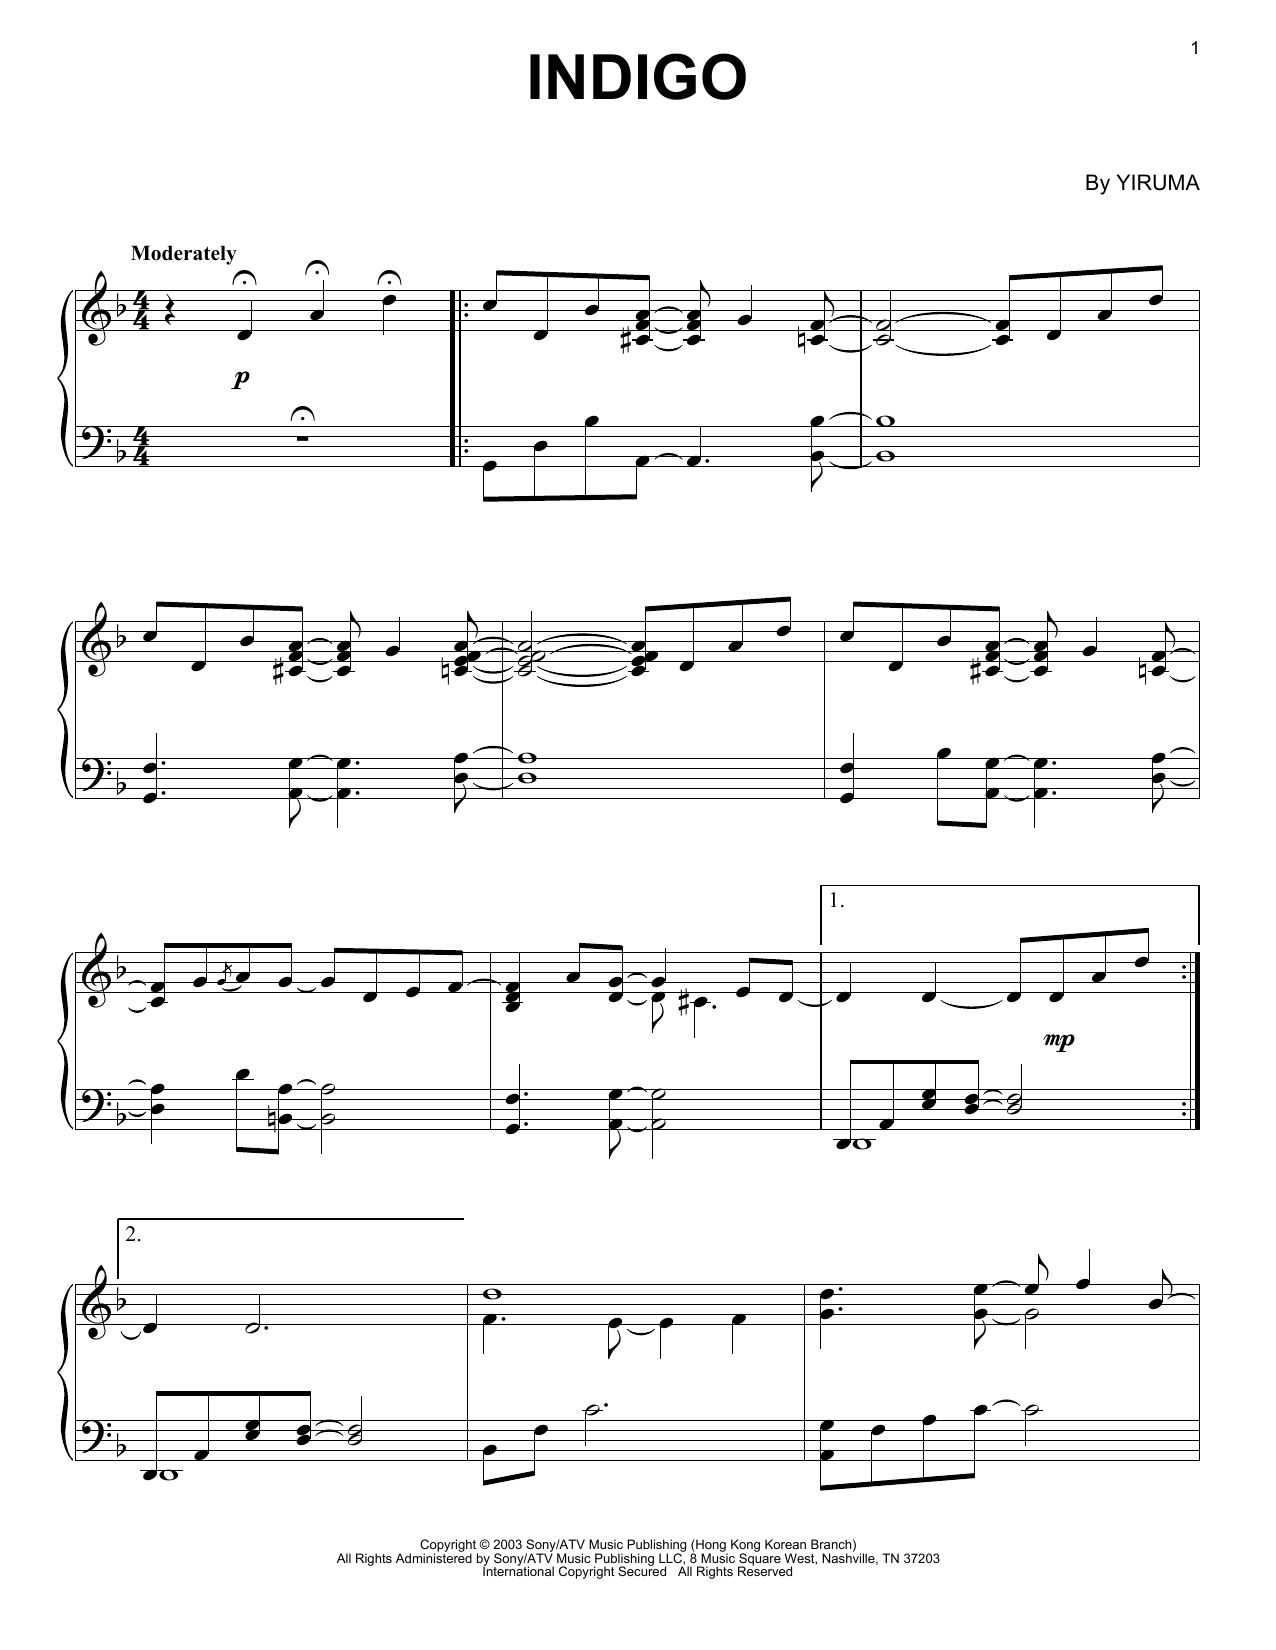 Yiruma Indigo Sheet Music Notes & Chords for Piano - Download or Print PDF